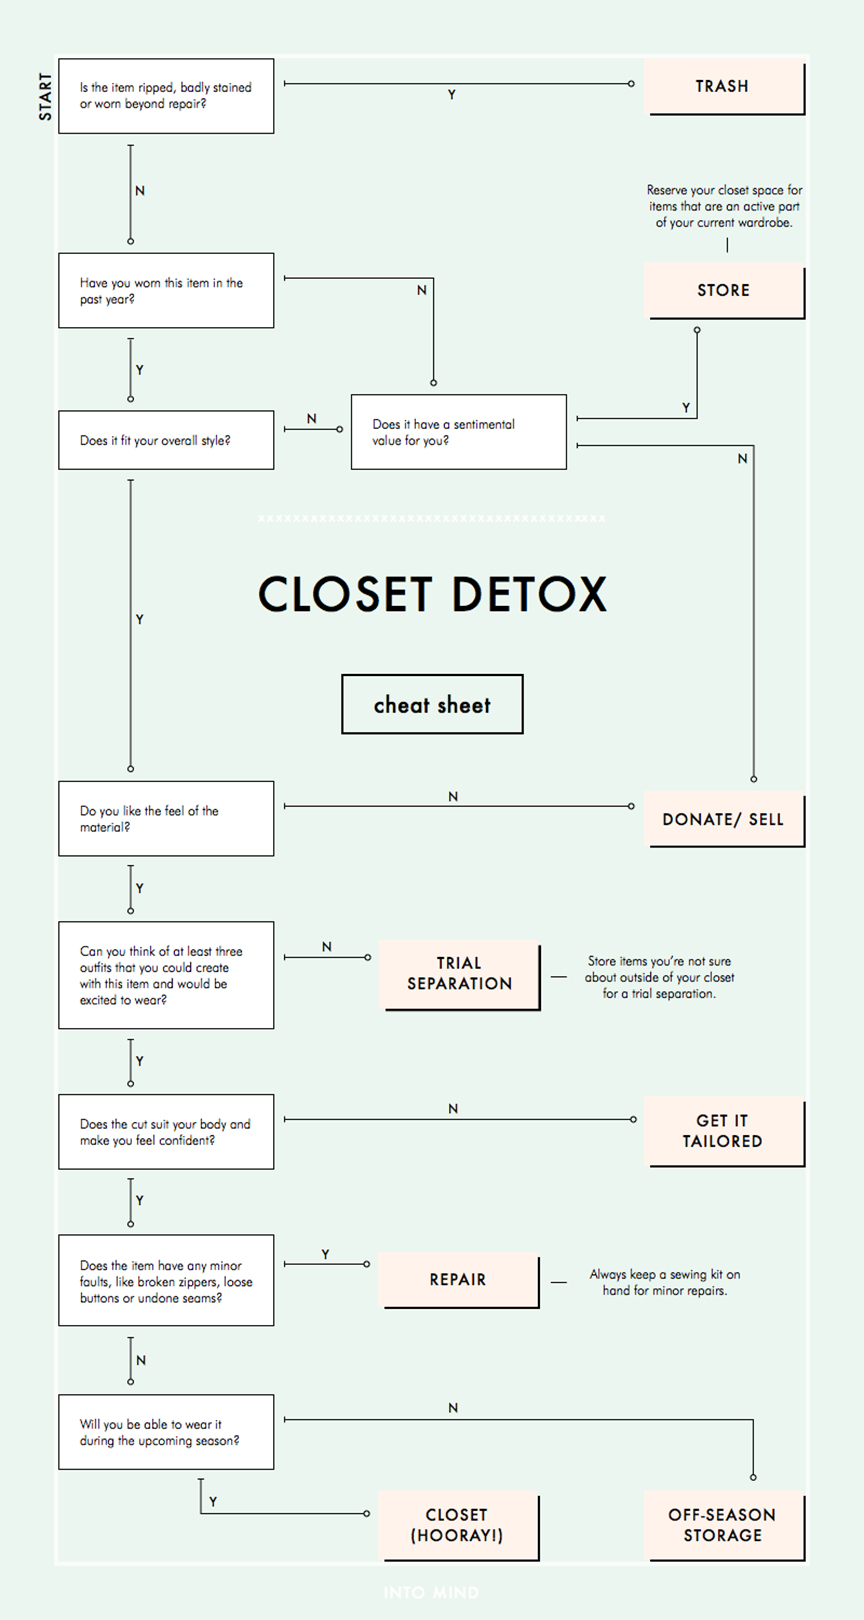 closet-detox-cheat-sheet-via-into-mind-de-smet-dossier